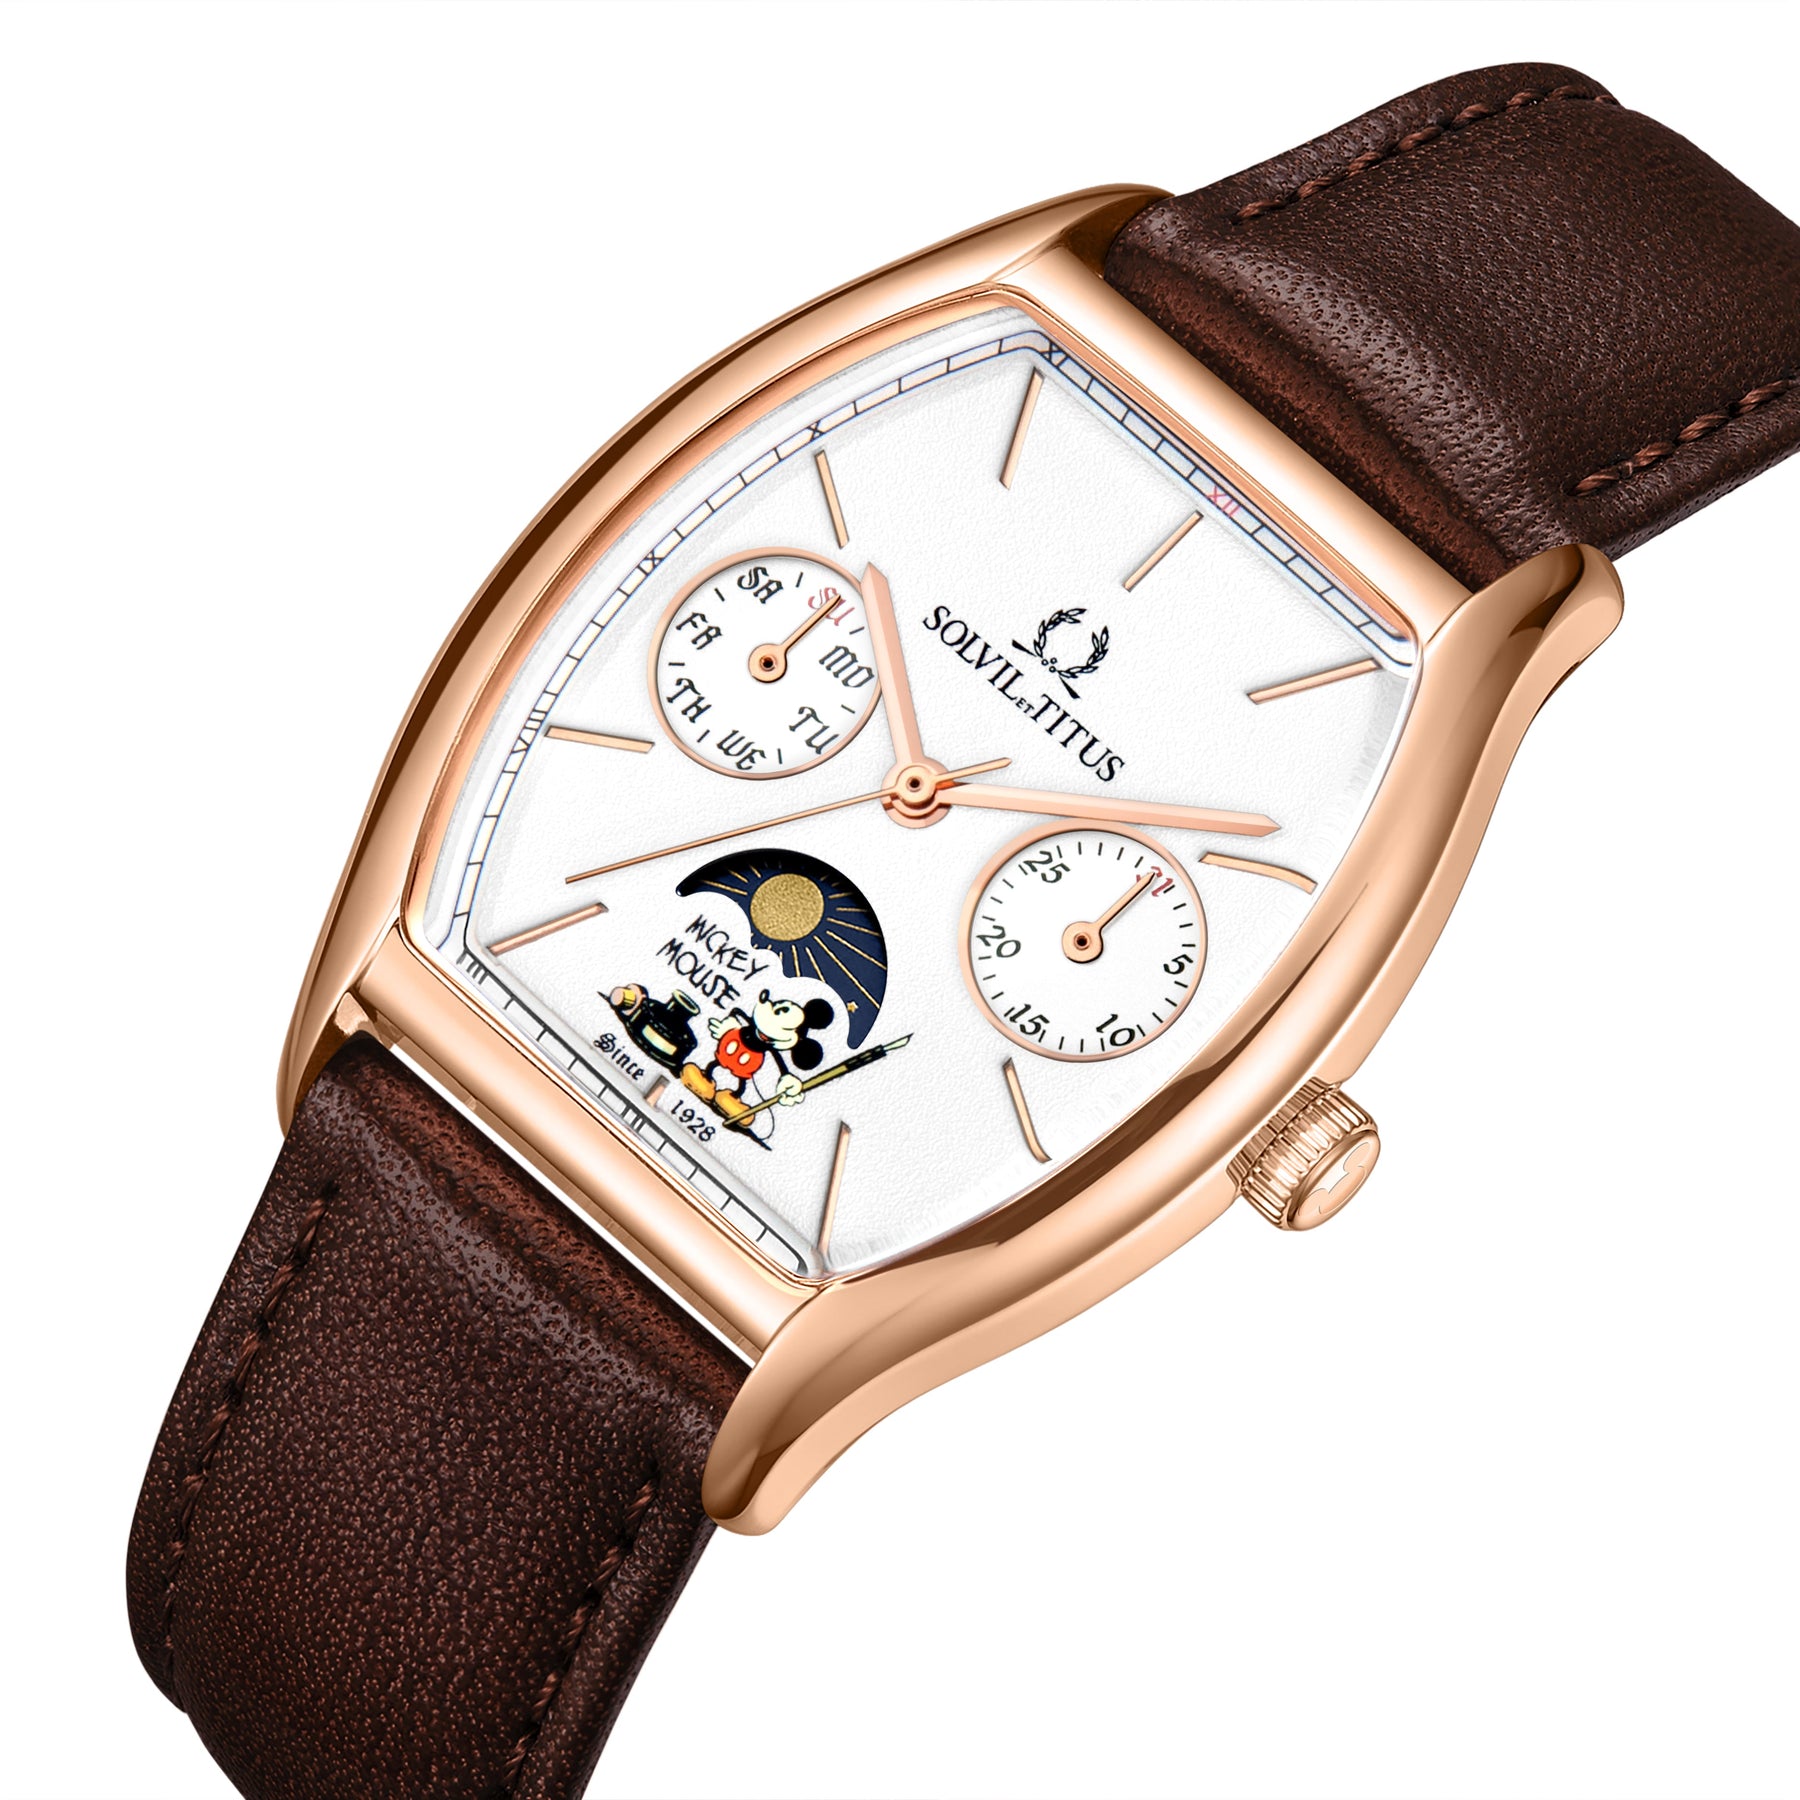 [Pre-Order] คอลเลกชัน Barista “Mickey Mouse 95th Anniversary” นาฬิกาผู้หญิง ลิมิเตดอิดิชัน เรือนสีโรสโกลด์ มัลติฟังก์ชัน บอกกลางวัน-กลางคืน ระบบควอตซ์ สายหนัง ขนาดตัวเรือน 31 มม. (W06-03356-002)